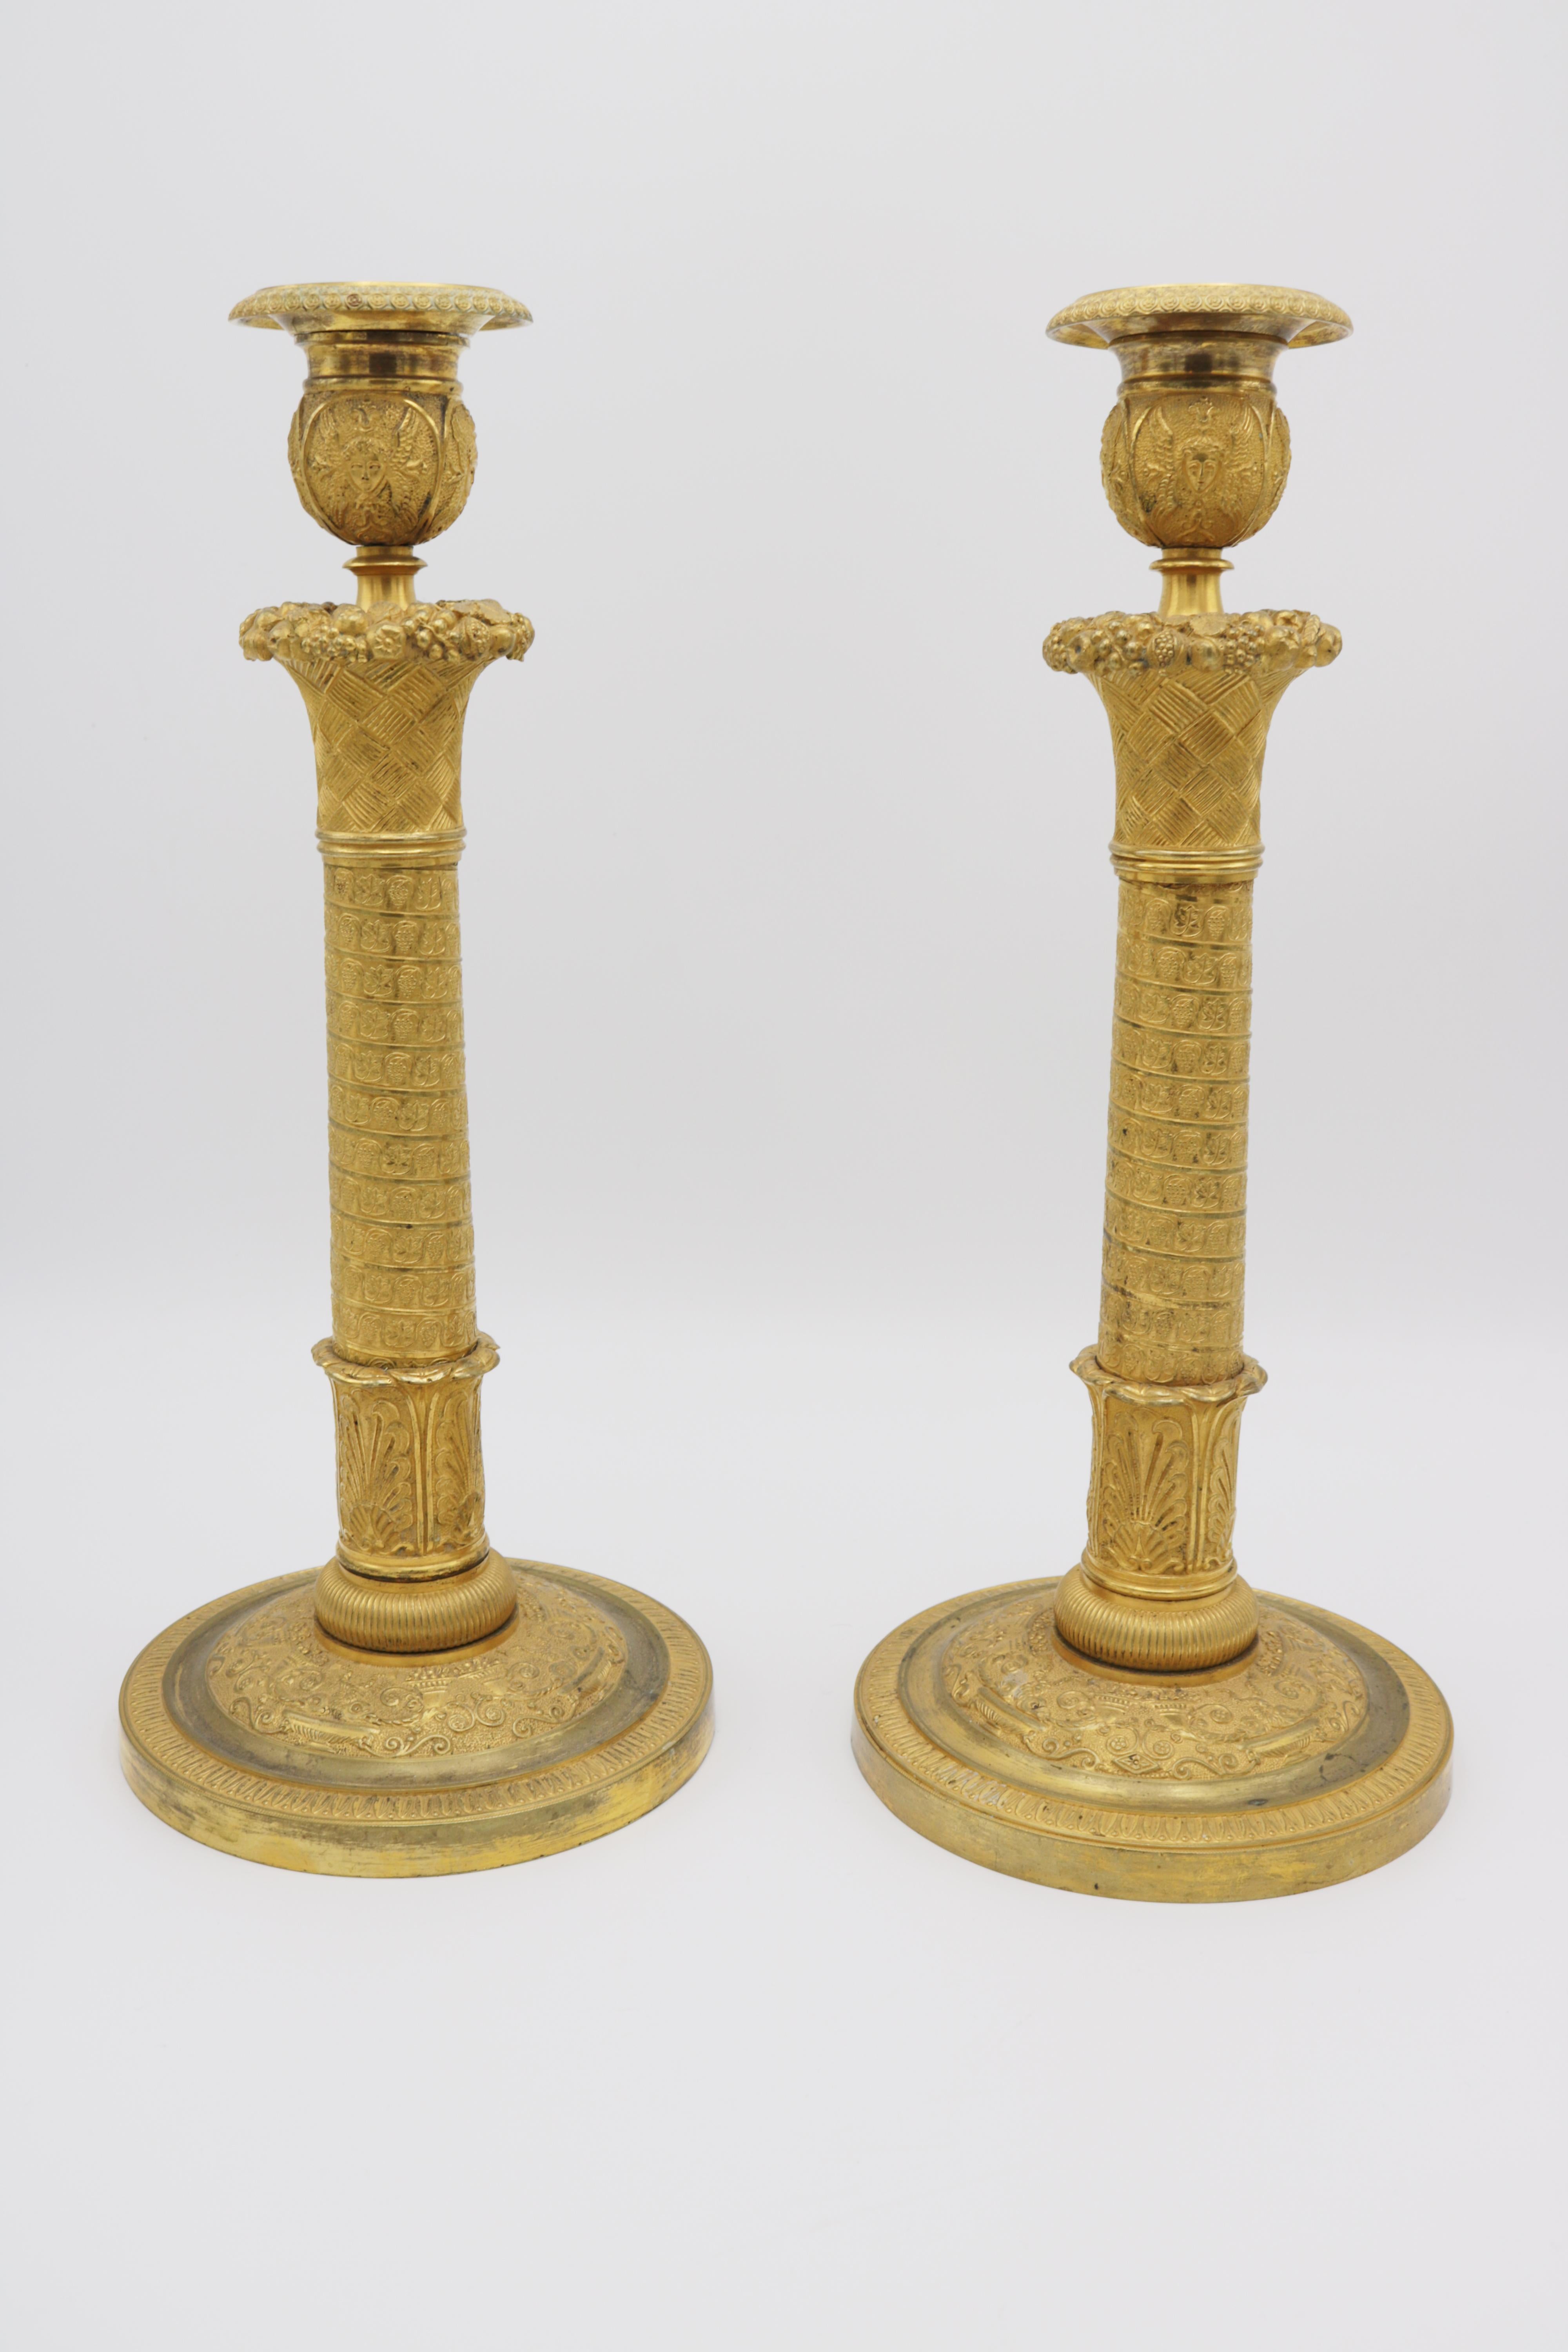 A fine pair of Empire ormolou candlesticks.